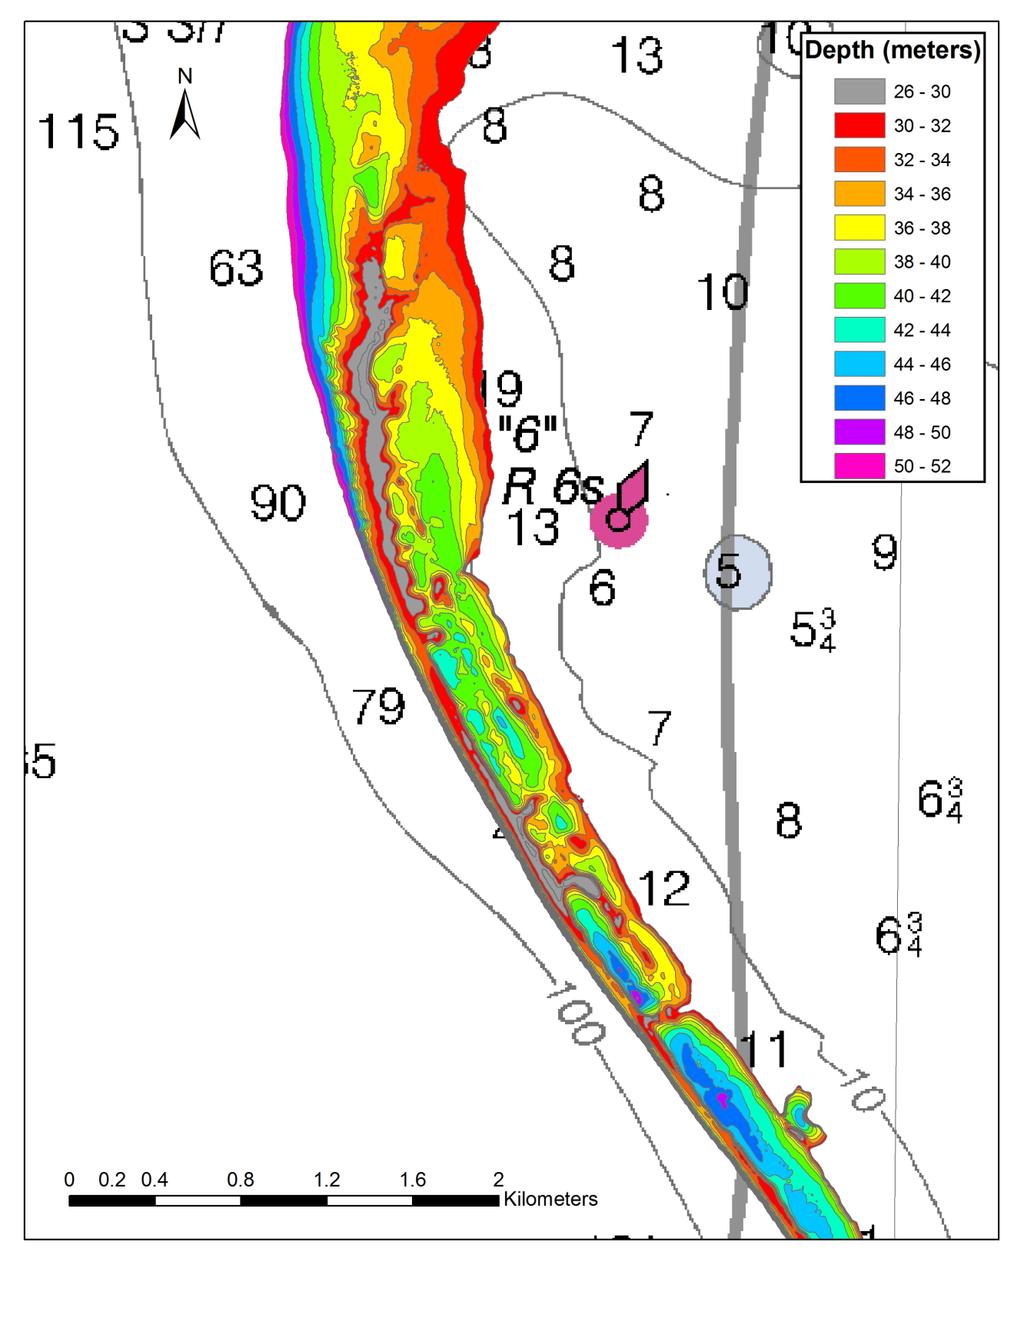 Figure 3. Bathymetry of the mesophotic study area at Abrir La Sierra. Source data: http://ccma.nos.noaa.